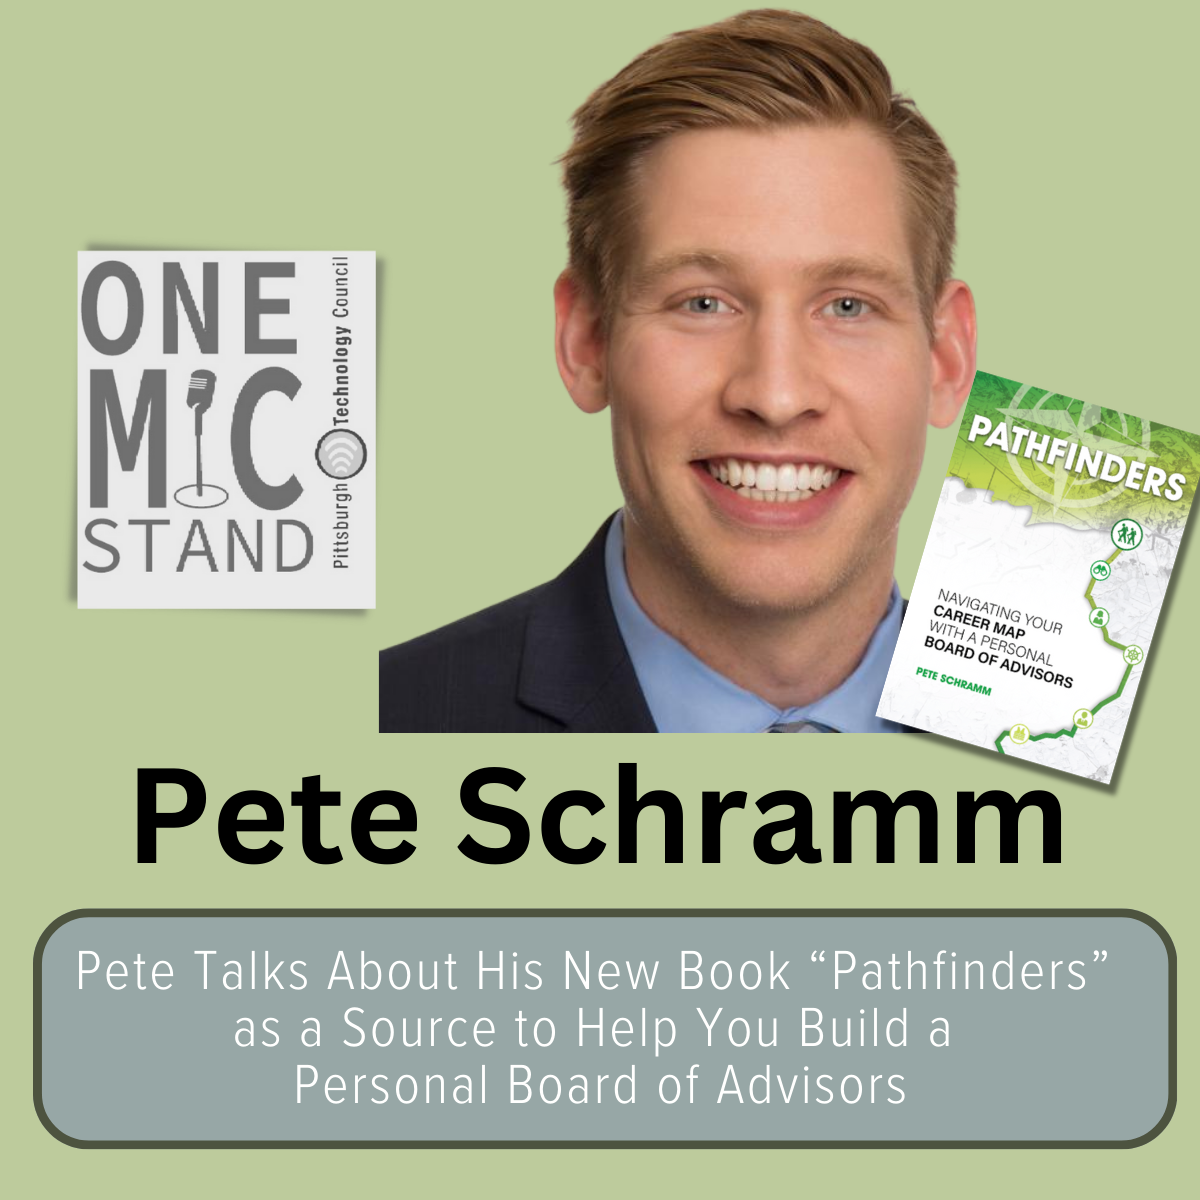 Pete Schramm and Pathfinders